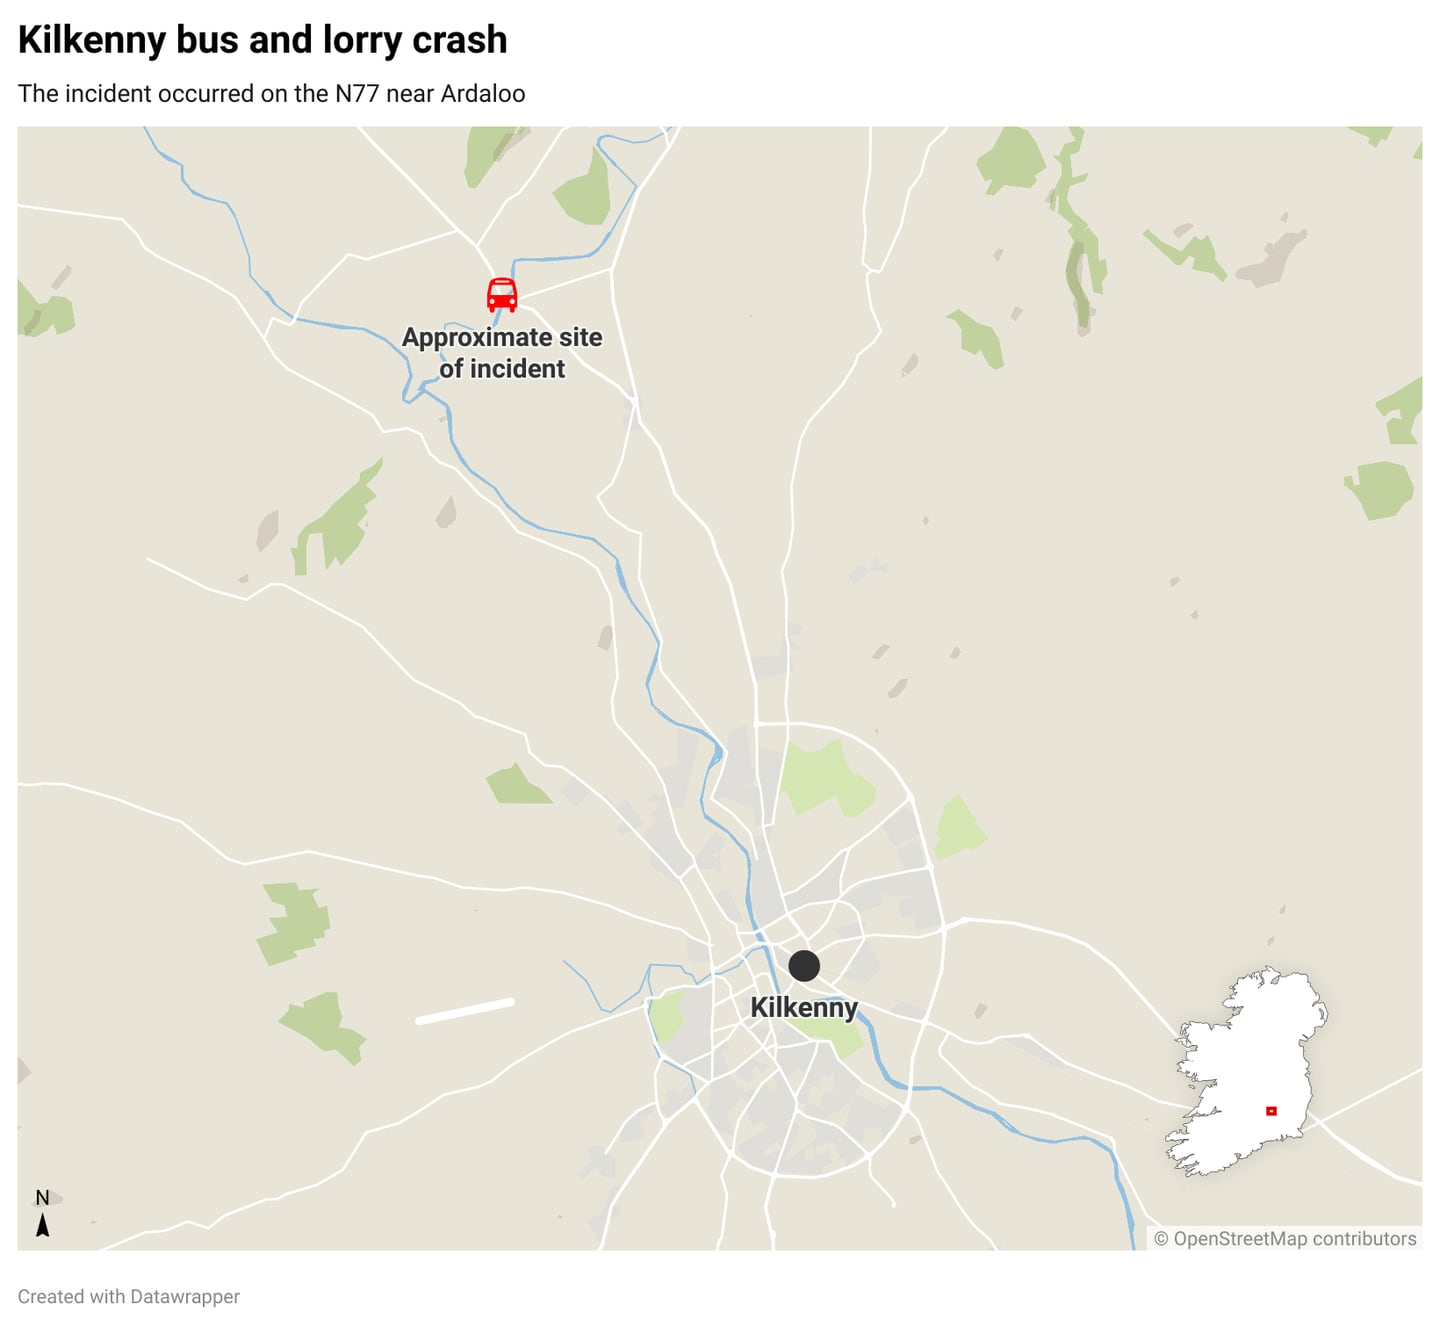 Kilkenny bus and lorry crash